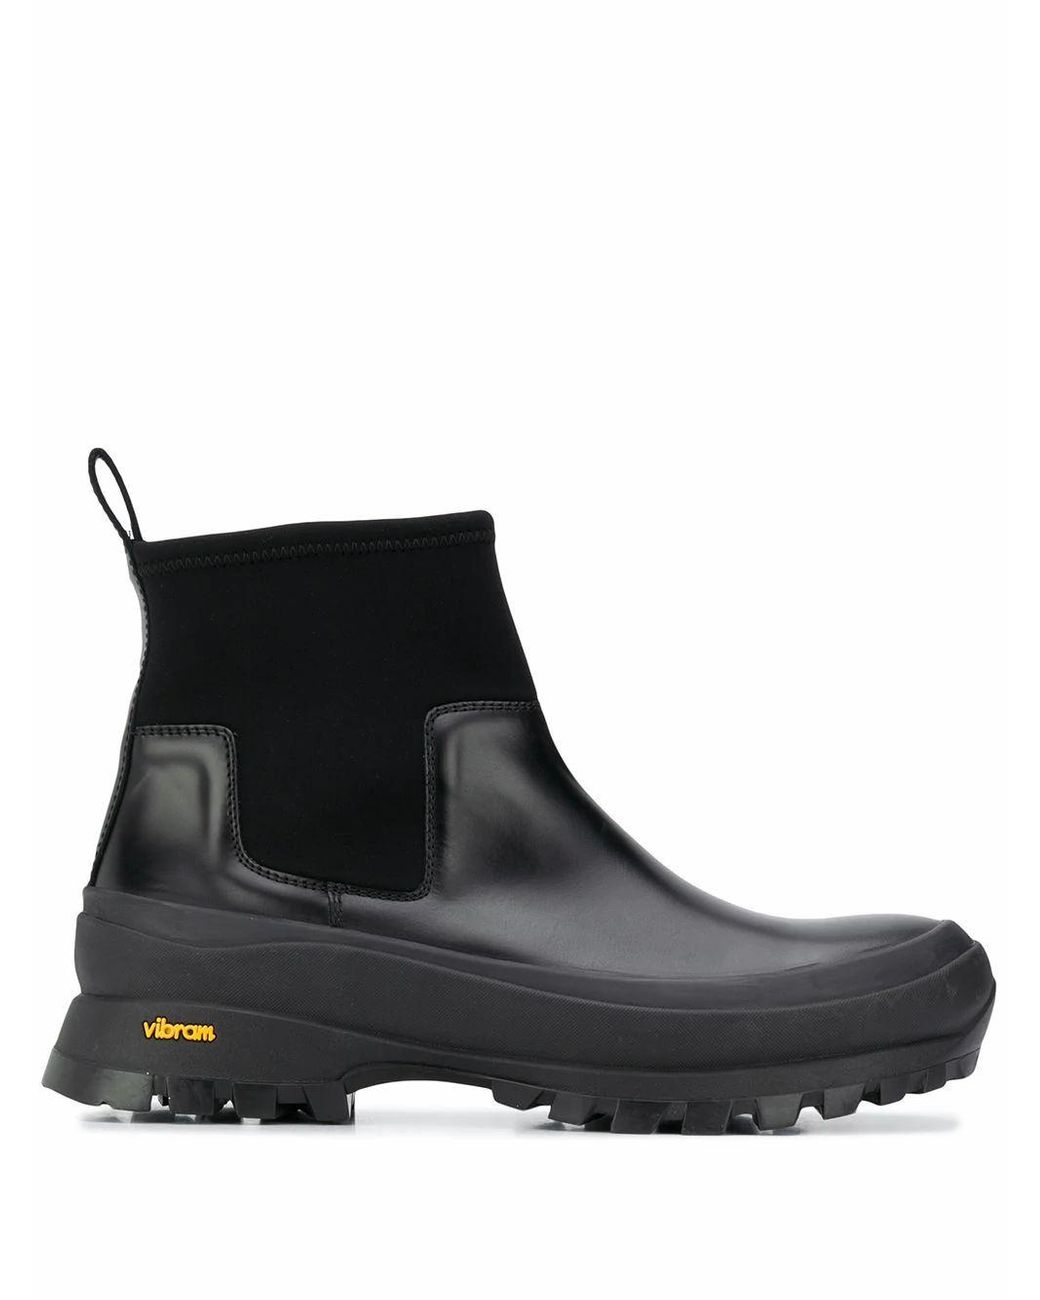 Jil Sander Leather Ankle Boots in Black for Men - Lyst